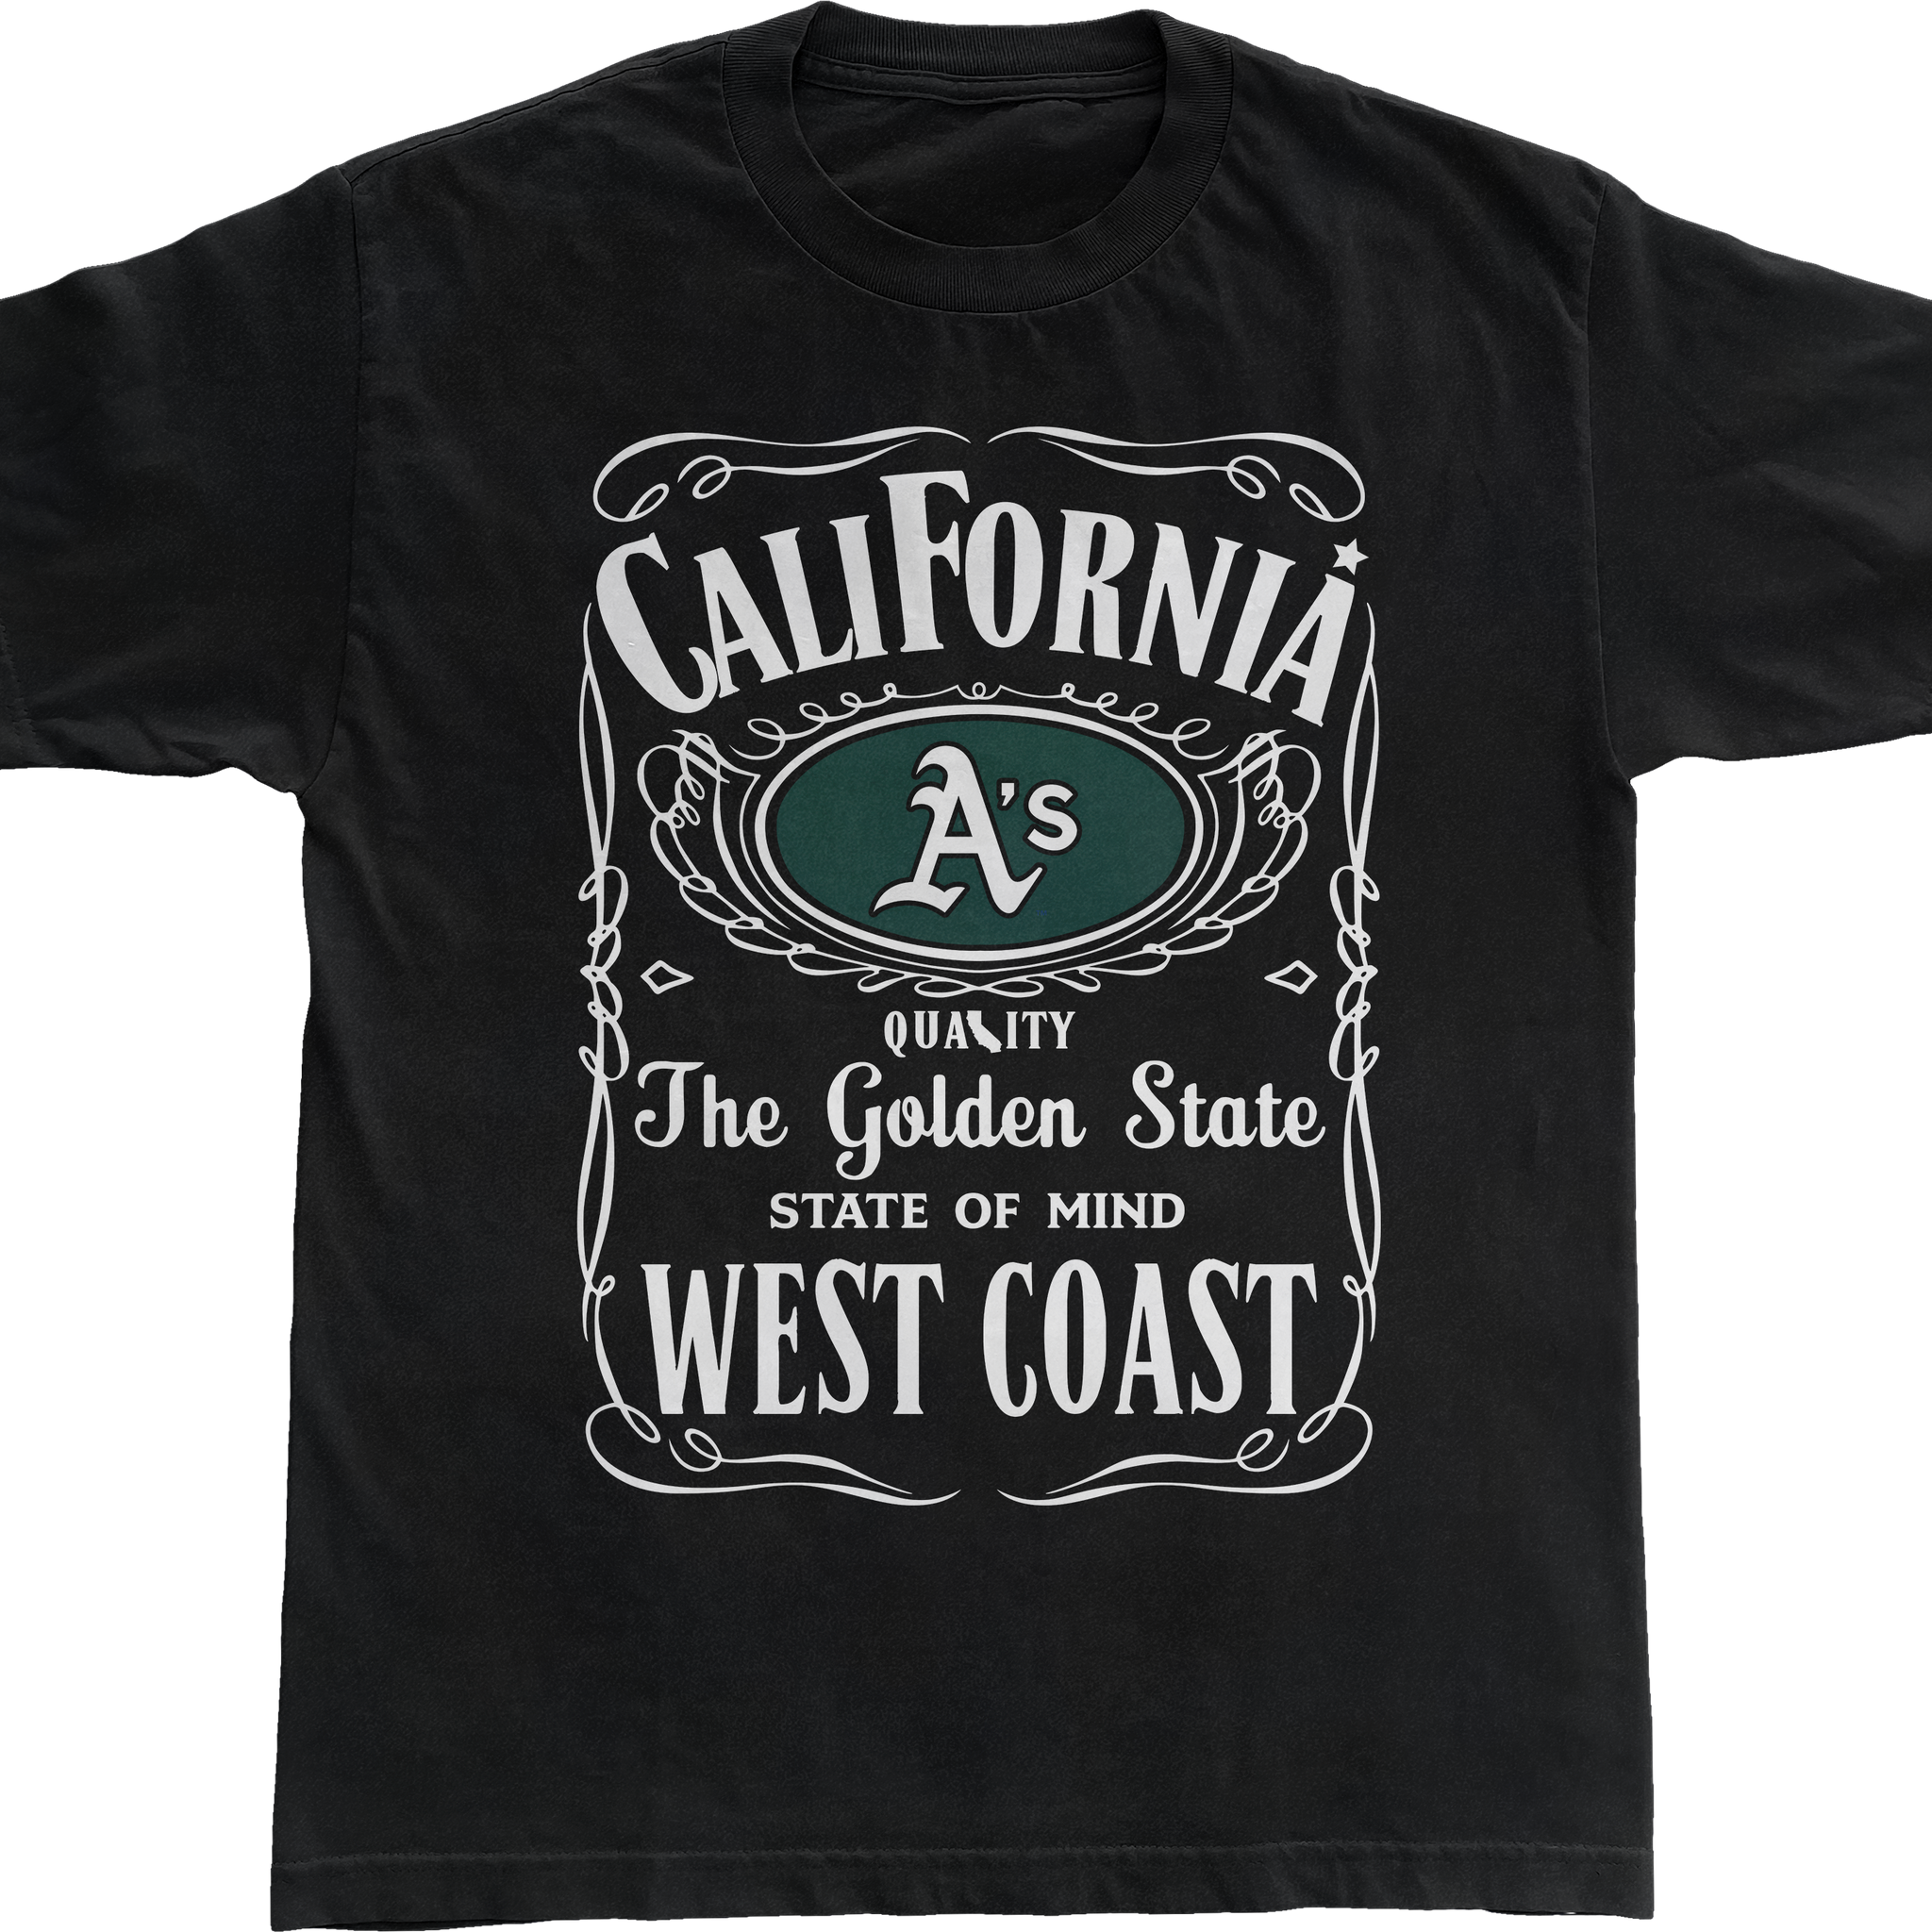 Oakland Athletics Whiskey T-Shirt